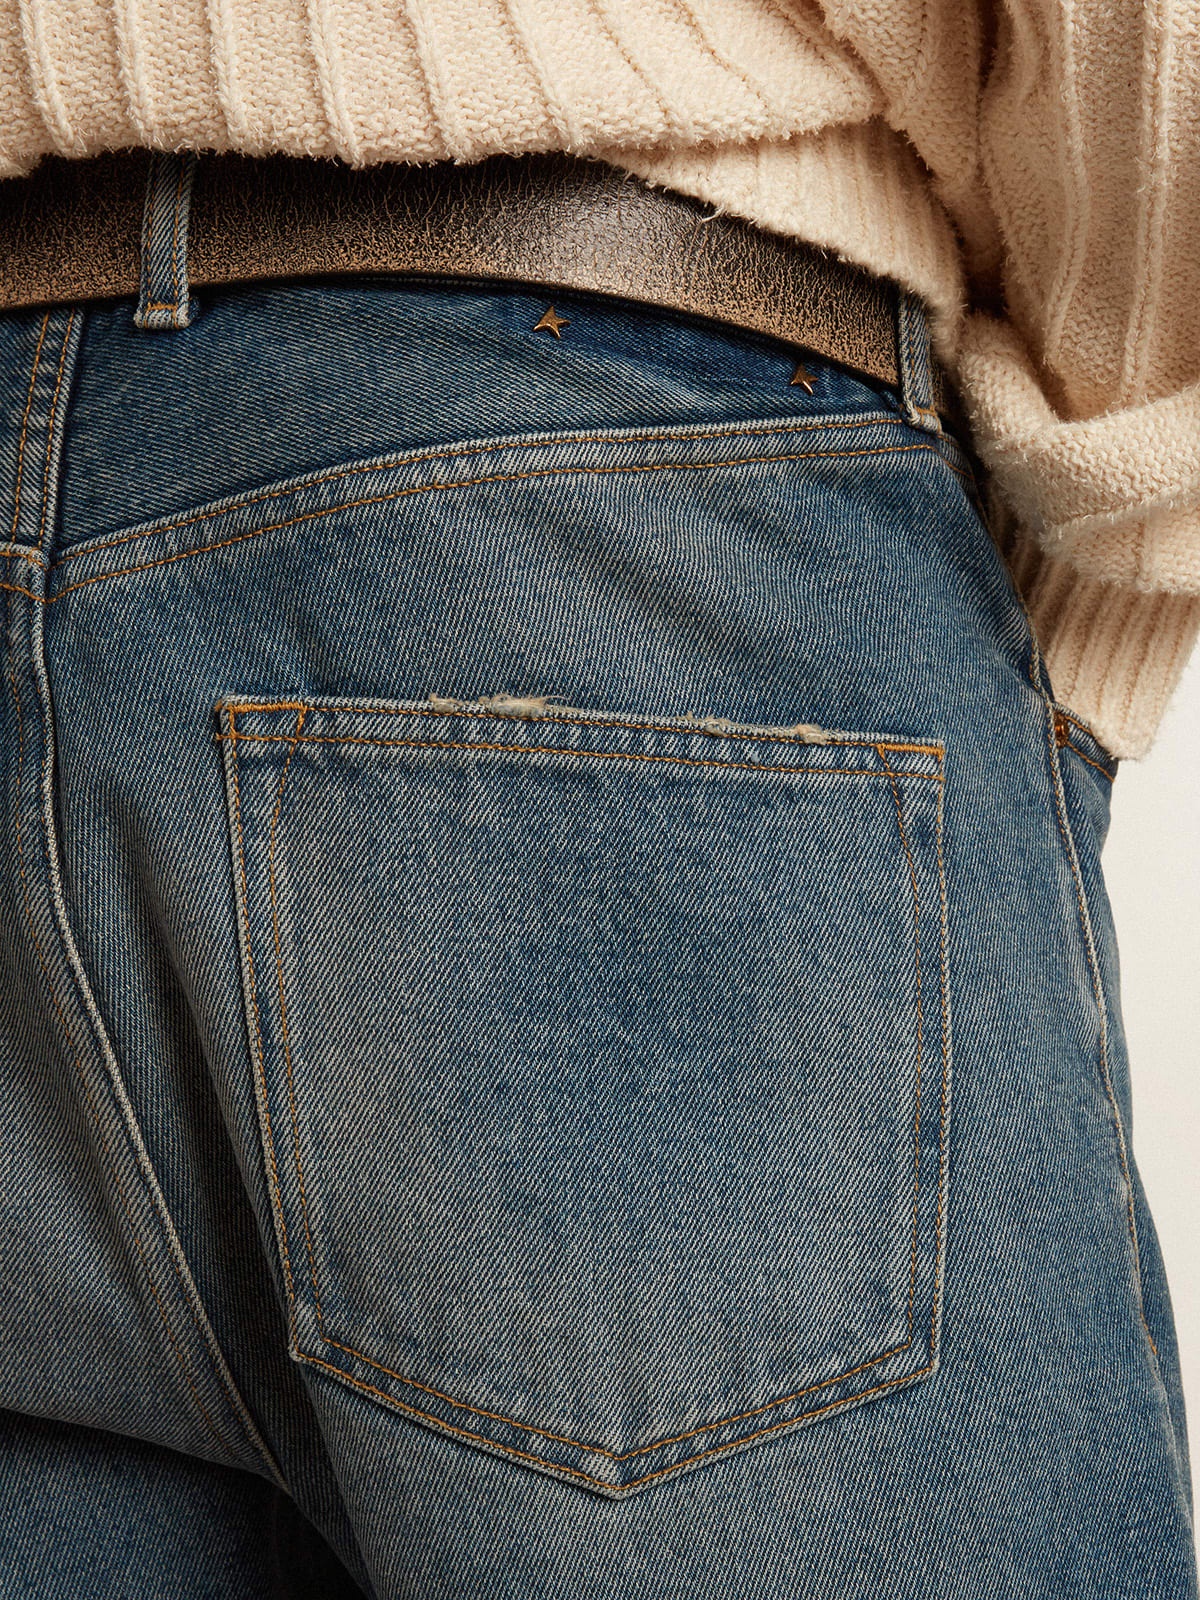 Men's slim fit jeans with medium wash - 5